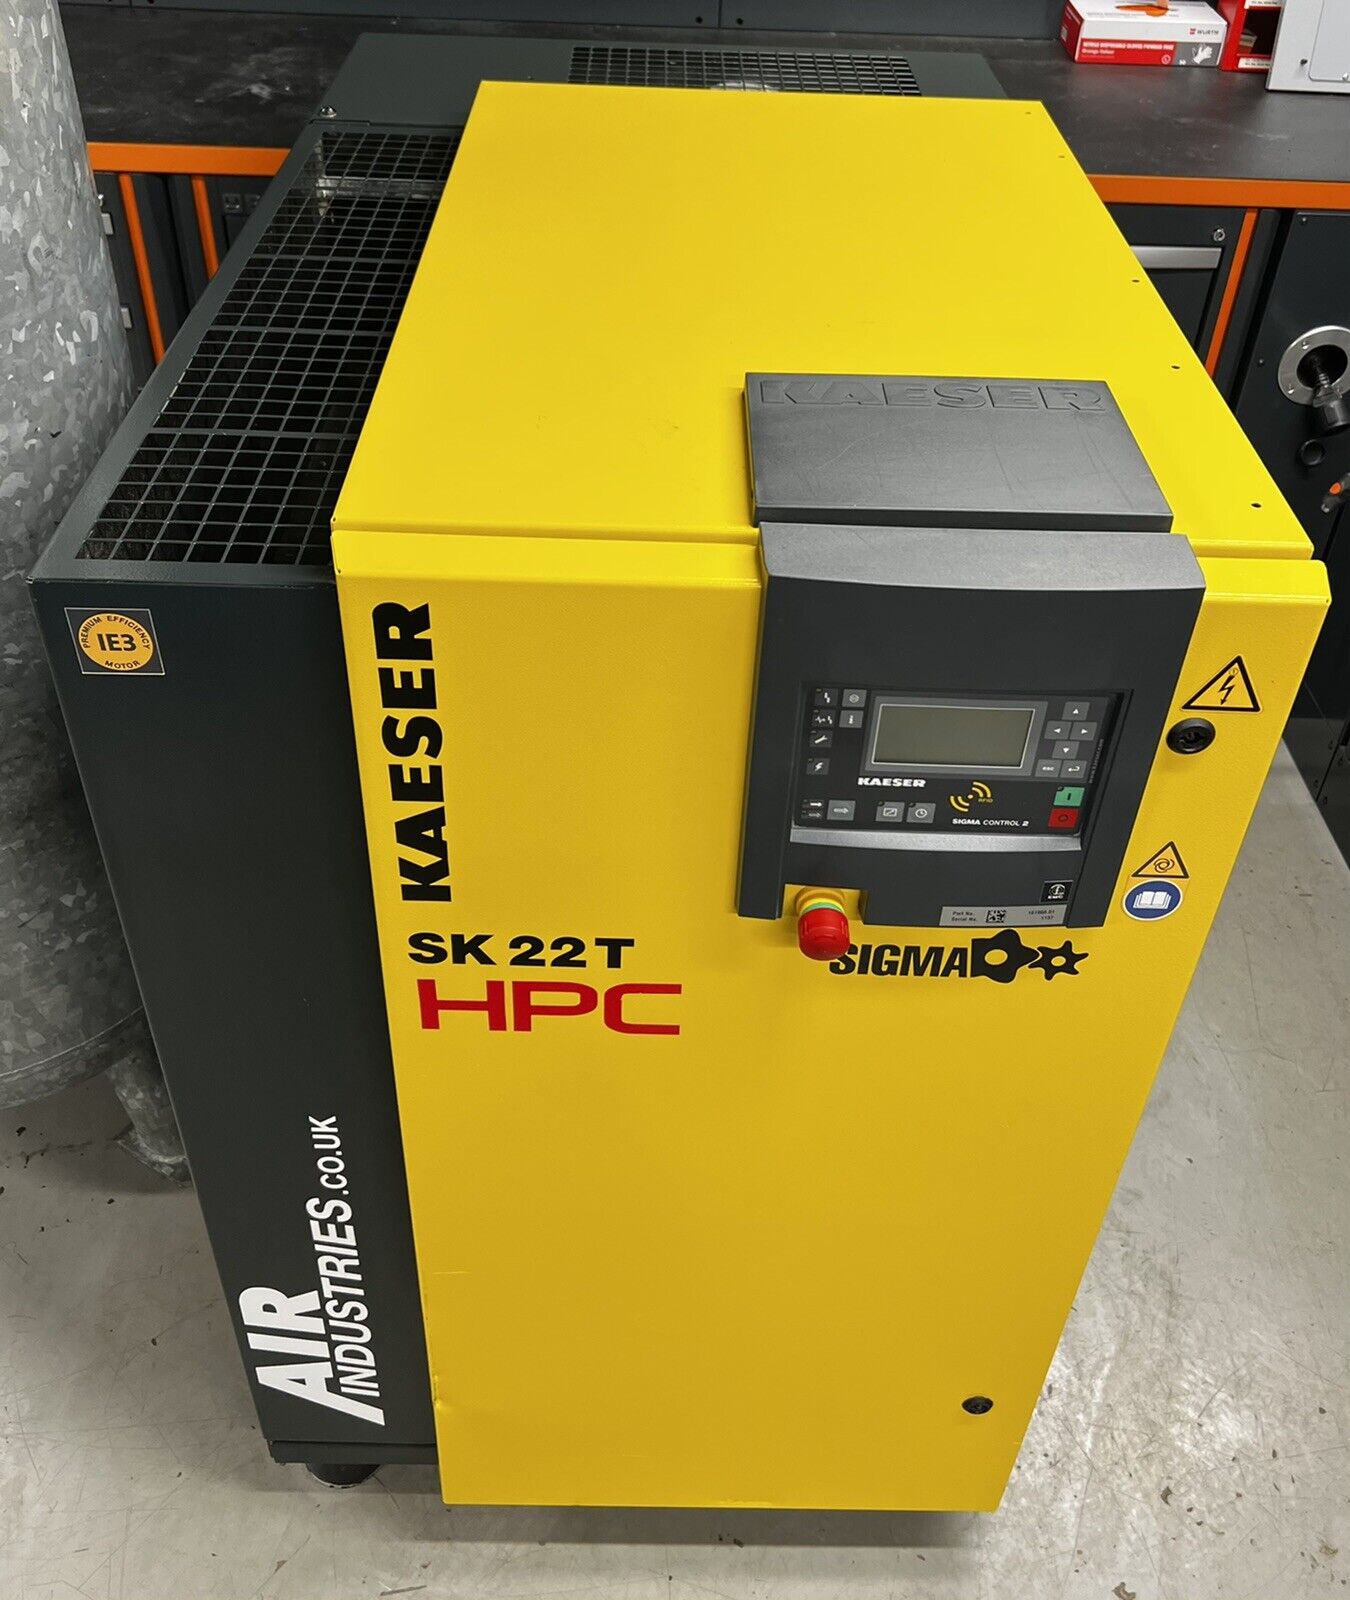 Kaeser / HPC SK22T Rotary Screw Compressor Package + Dryer + Receiver (70CFM)